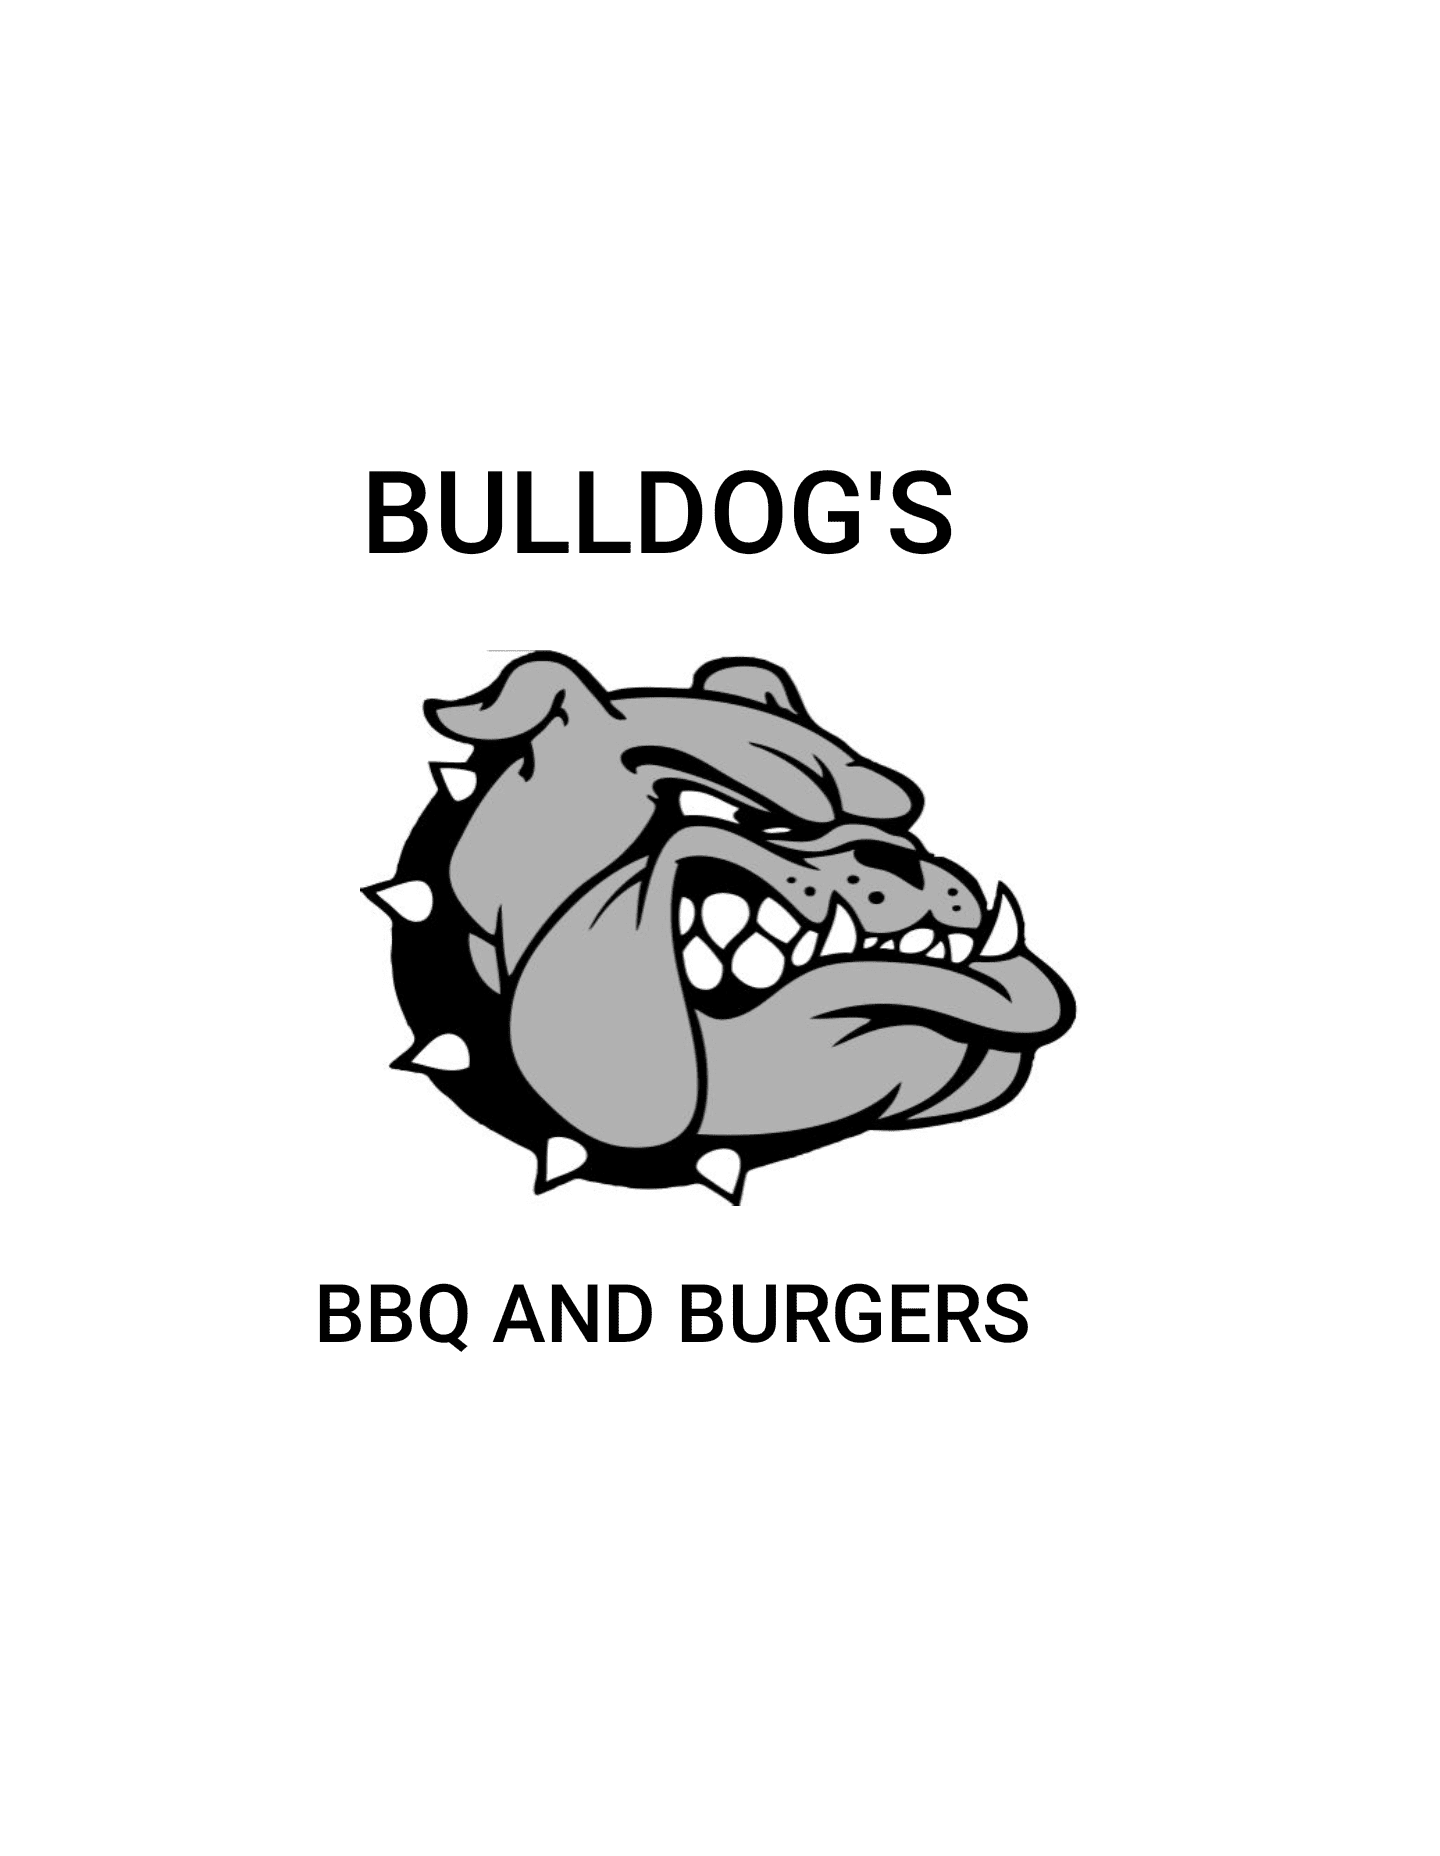 Bulldog's BBQ And Burgers